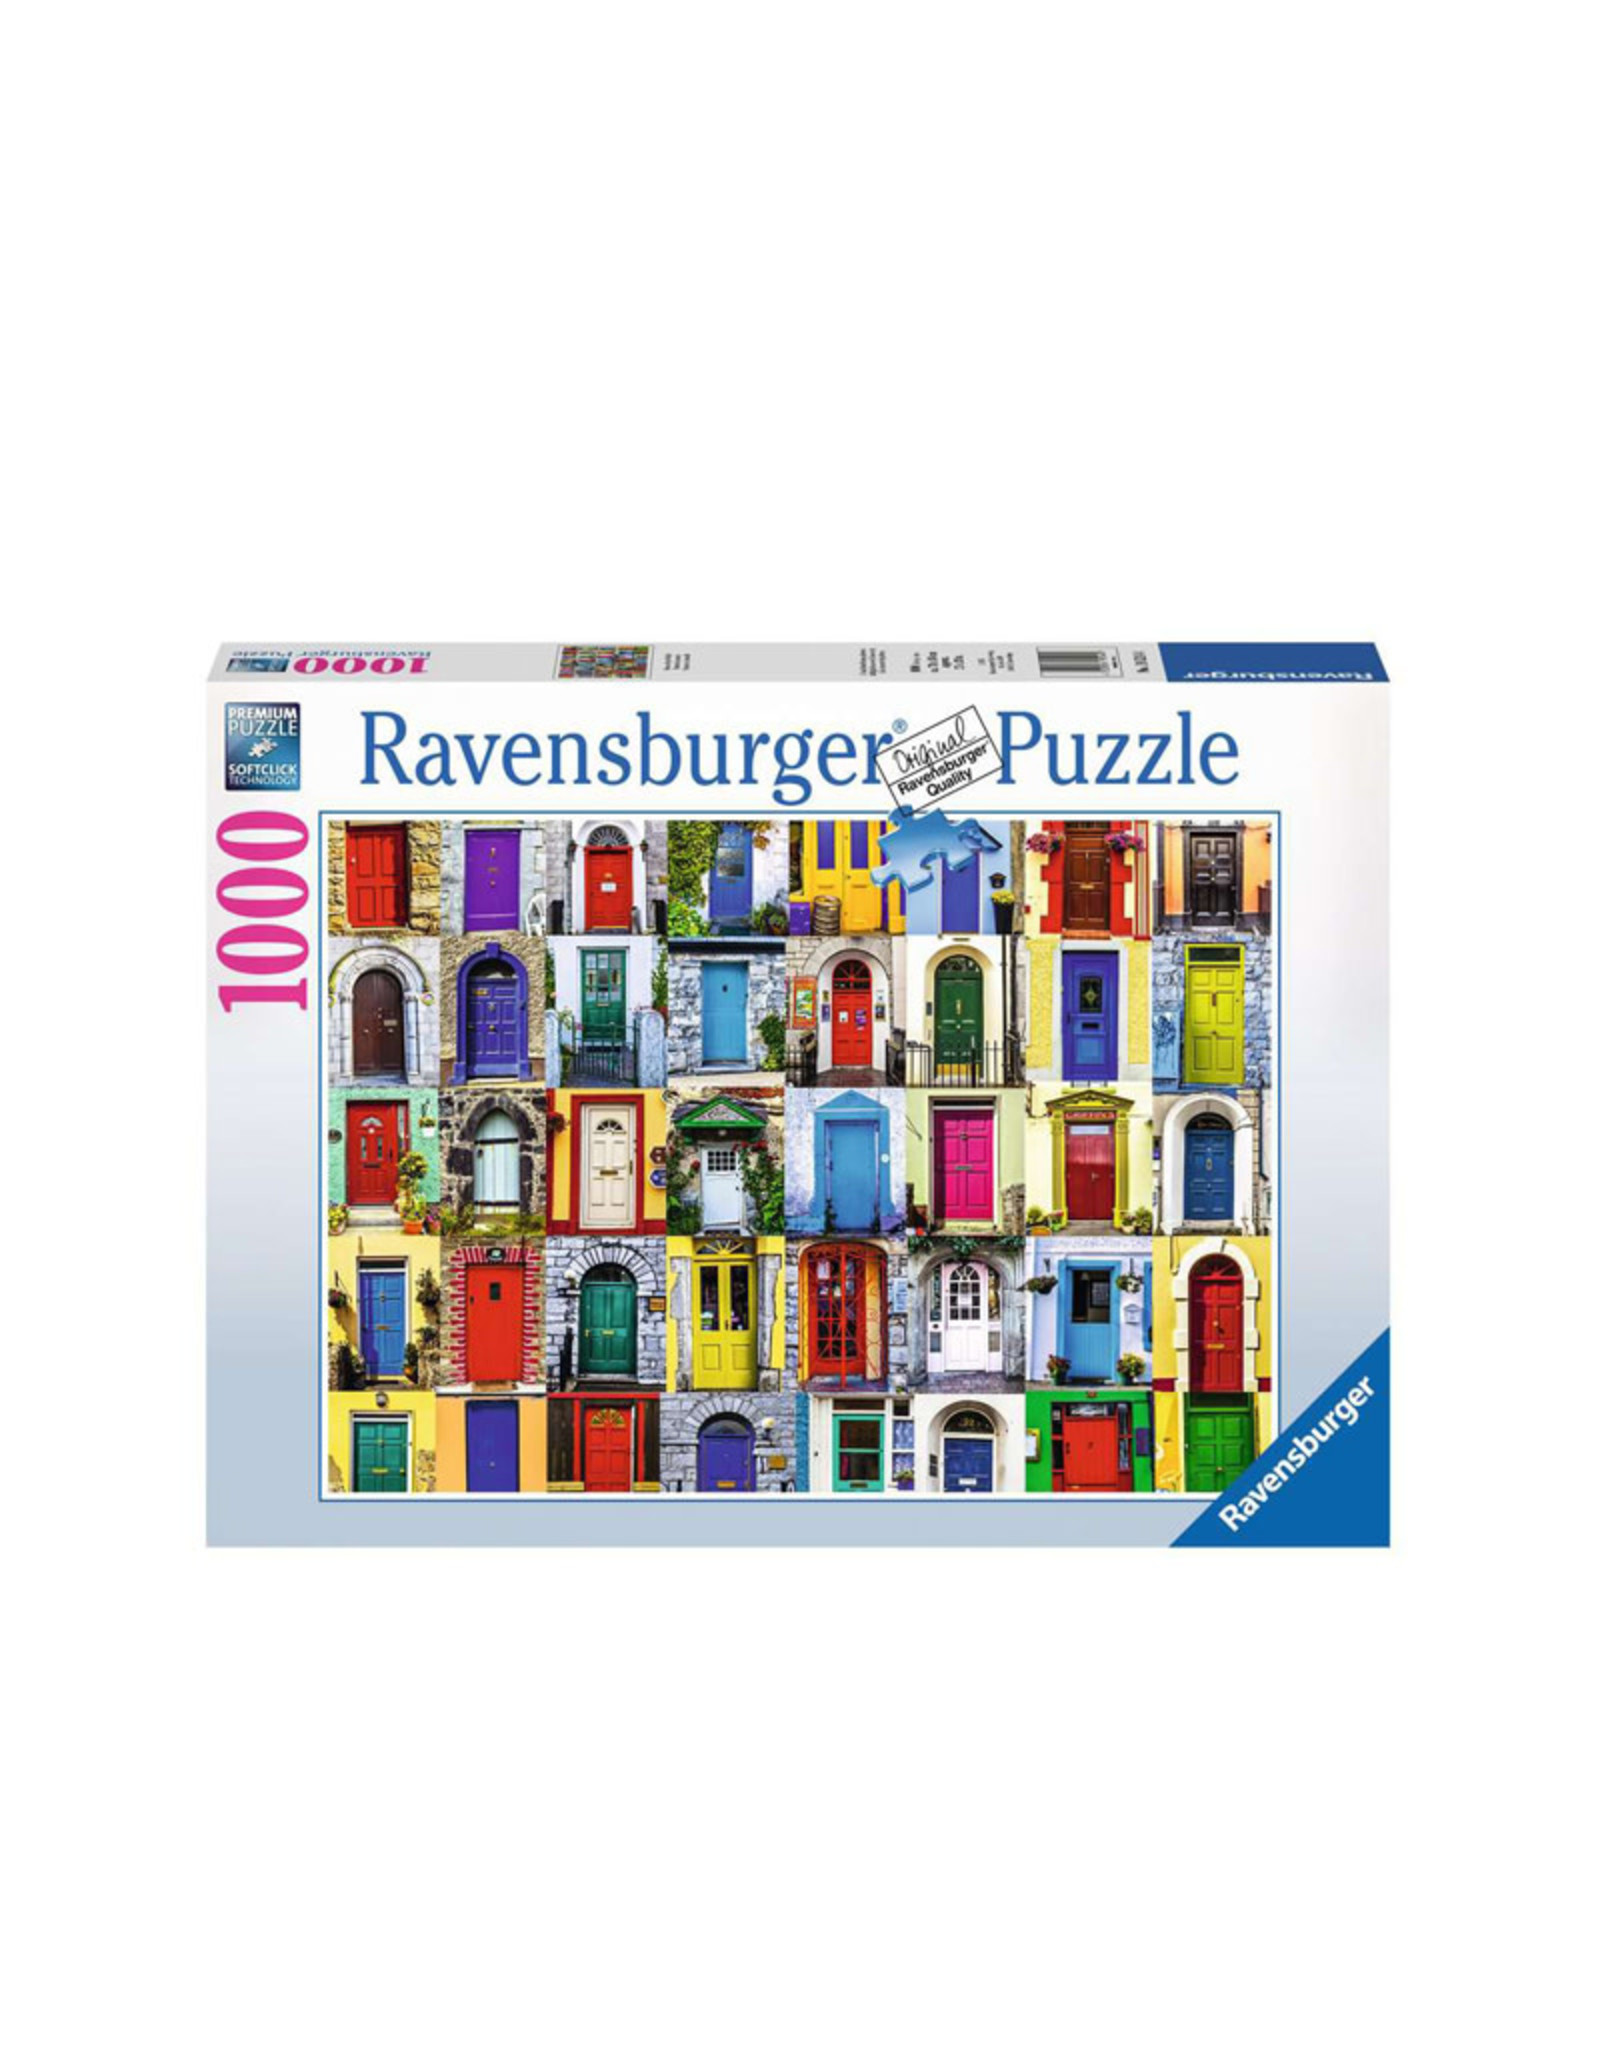 Ravensburger Doors of the World Puzzle (1000 PCS)